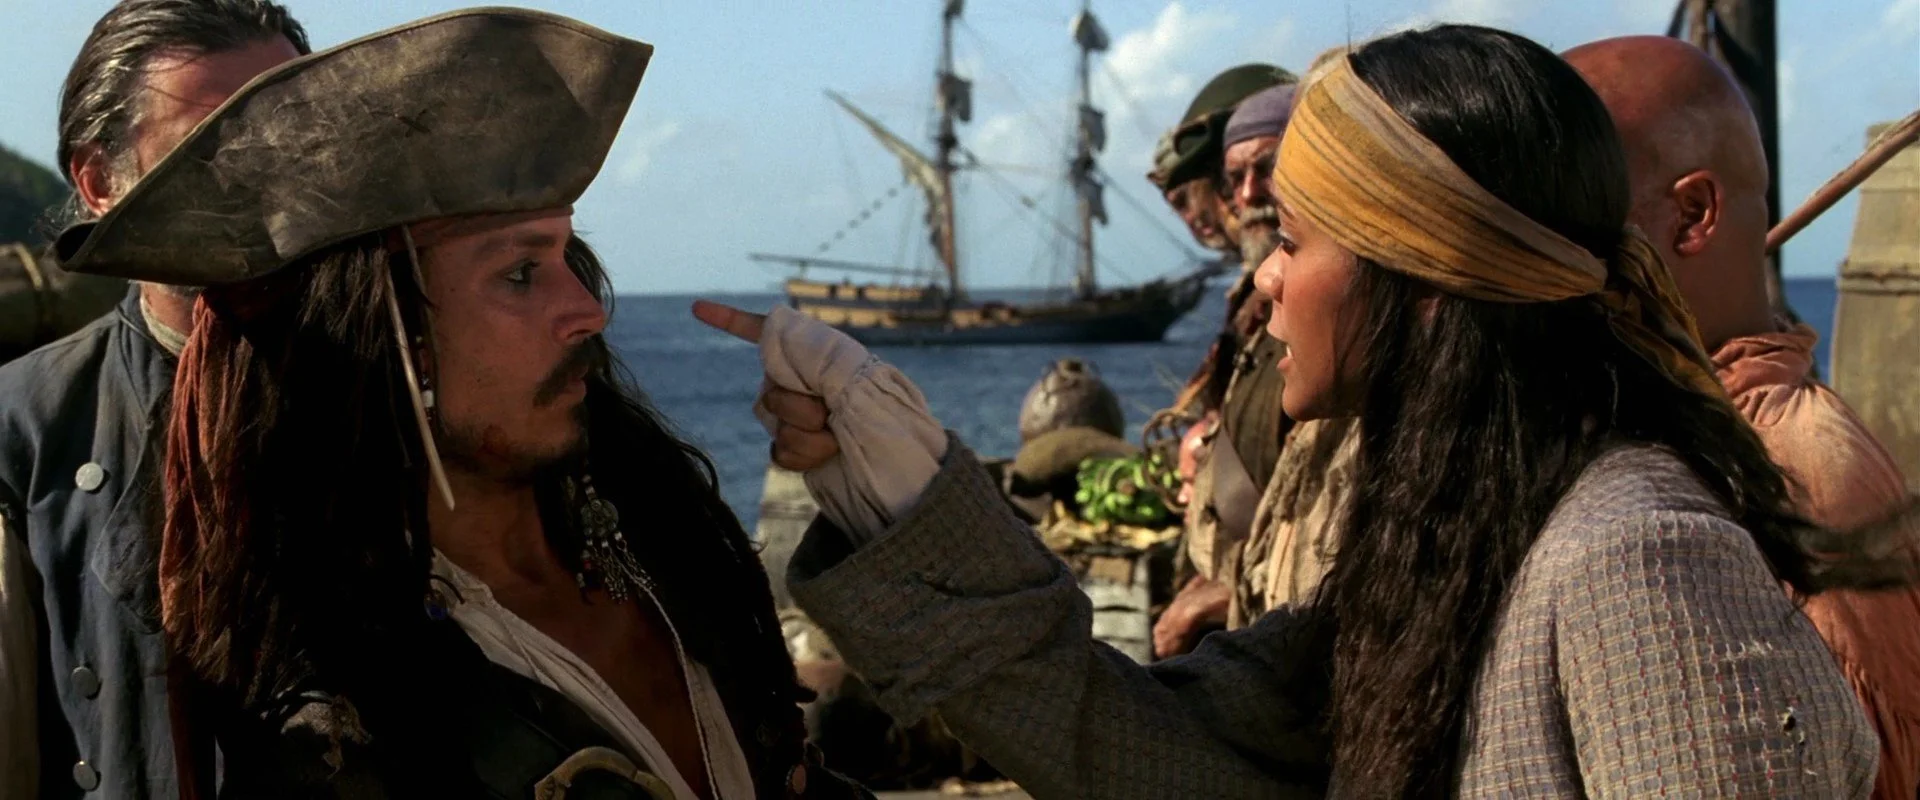 Киномарафон: обзор всех «Пиратов Карибского моря» - фото 2